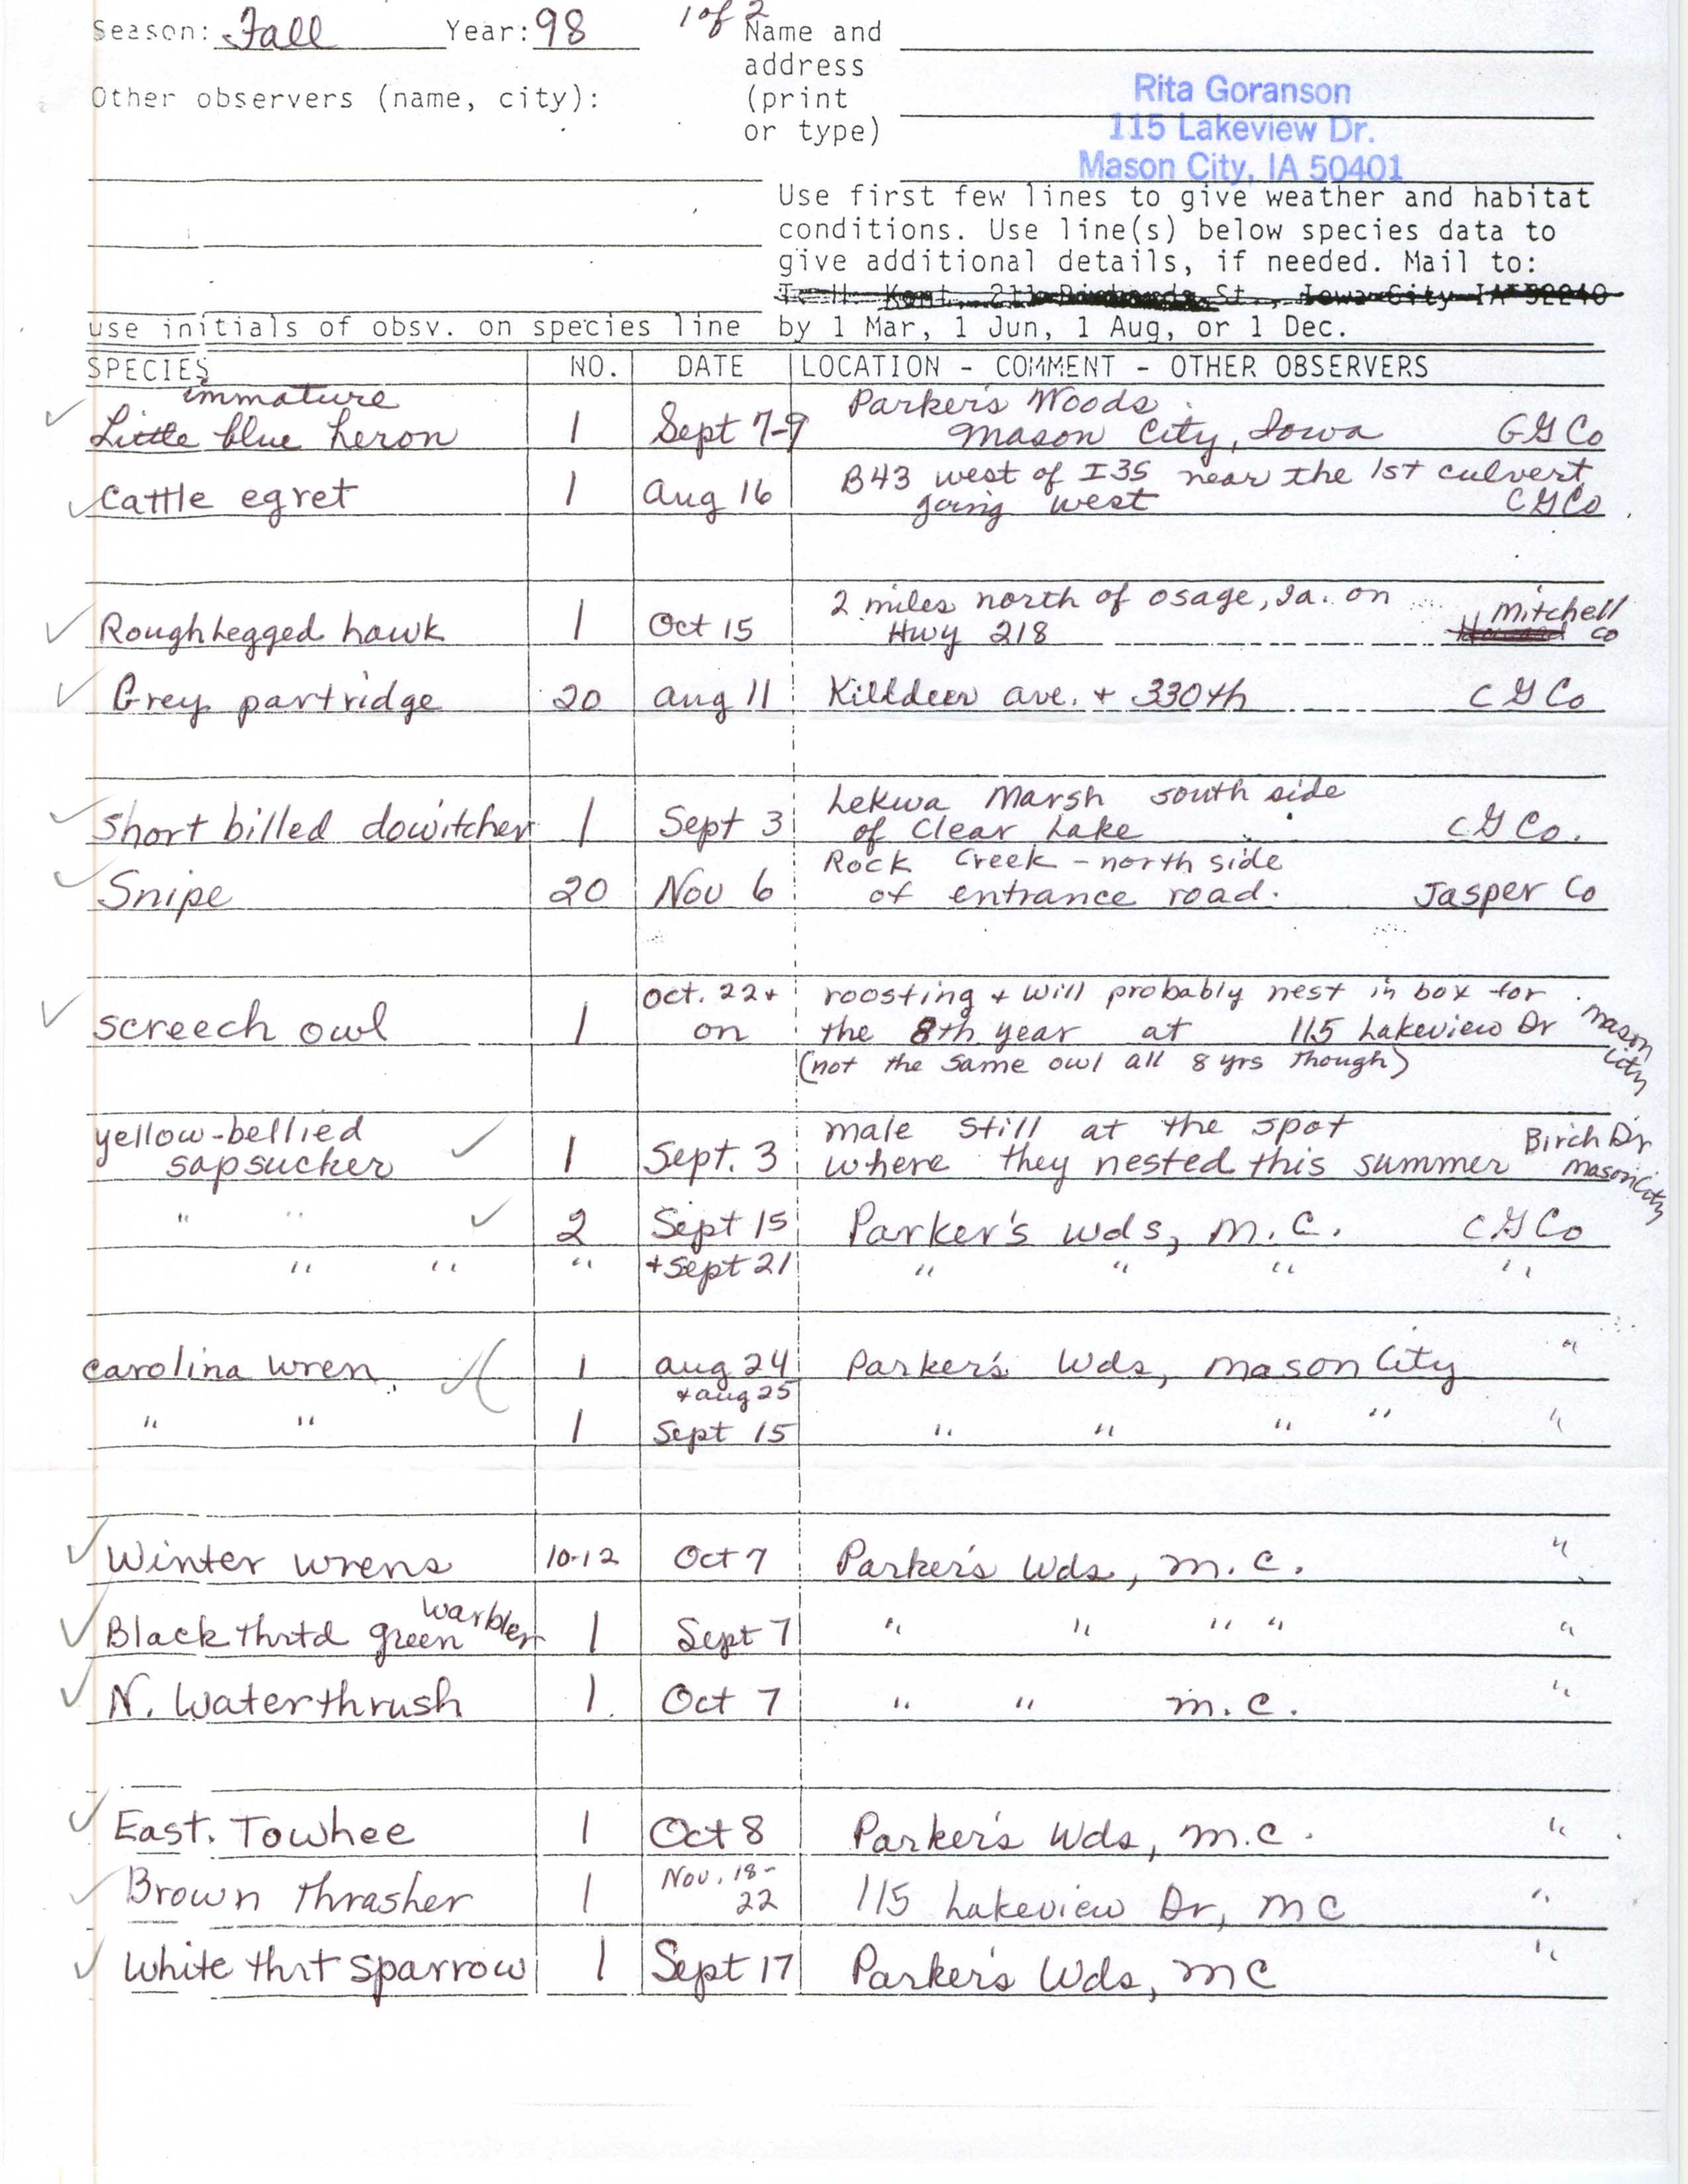 Field reports form for submitting seasonal observations of Iowa birds, Rita Goranson, fall 1998